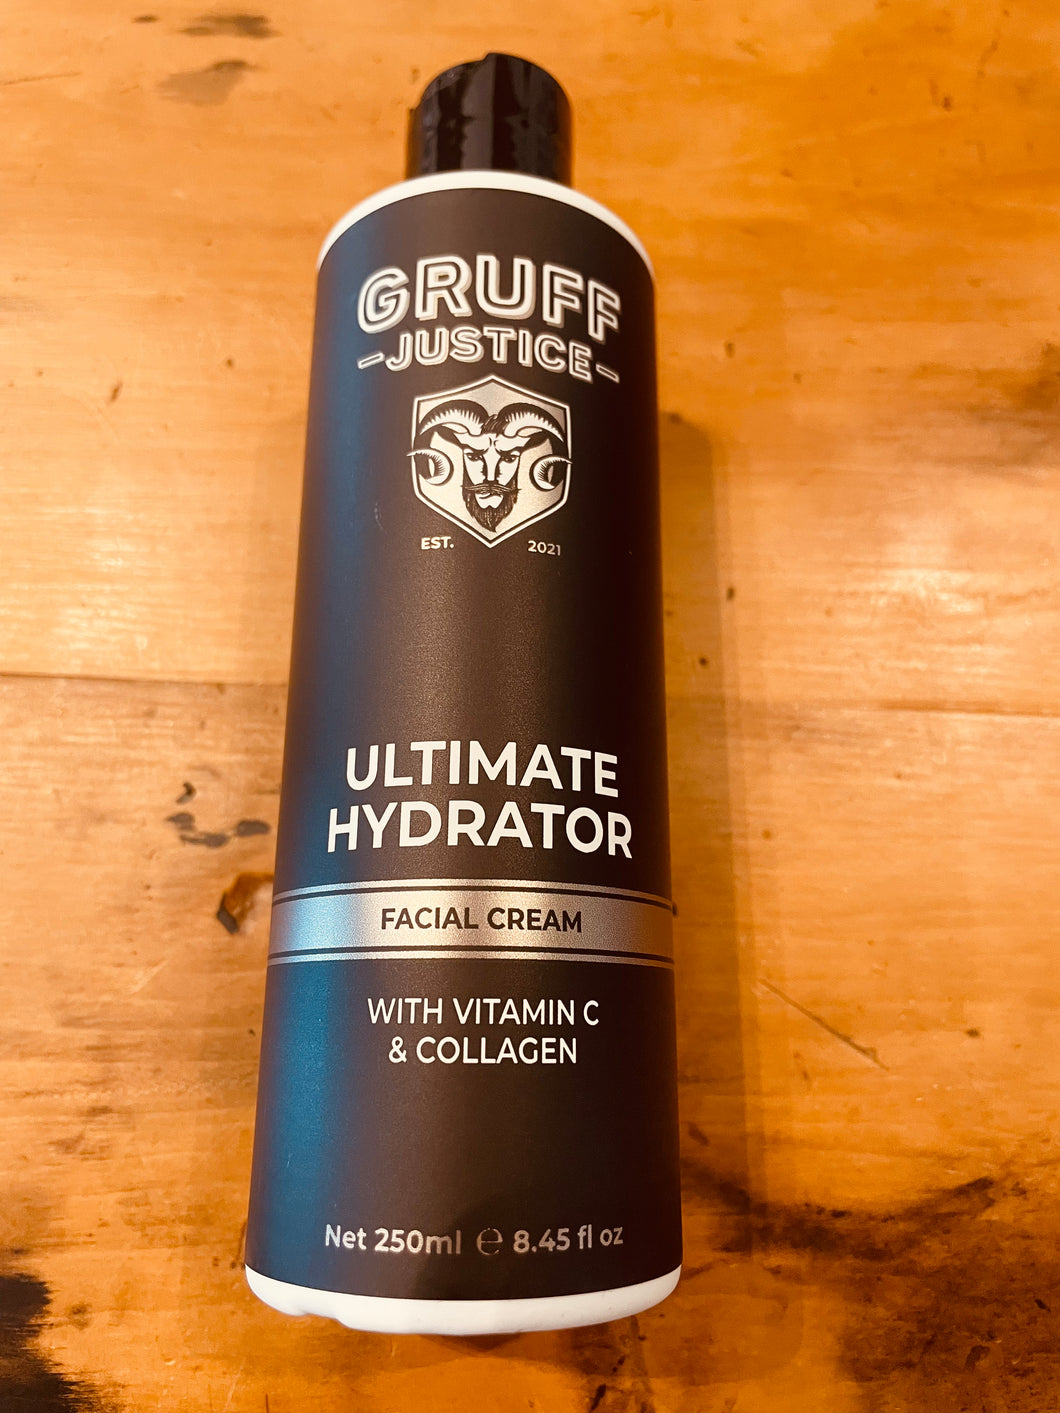 Gruff Justice Ultimate Hydrator